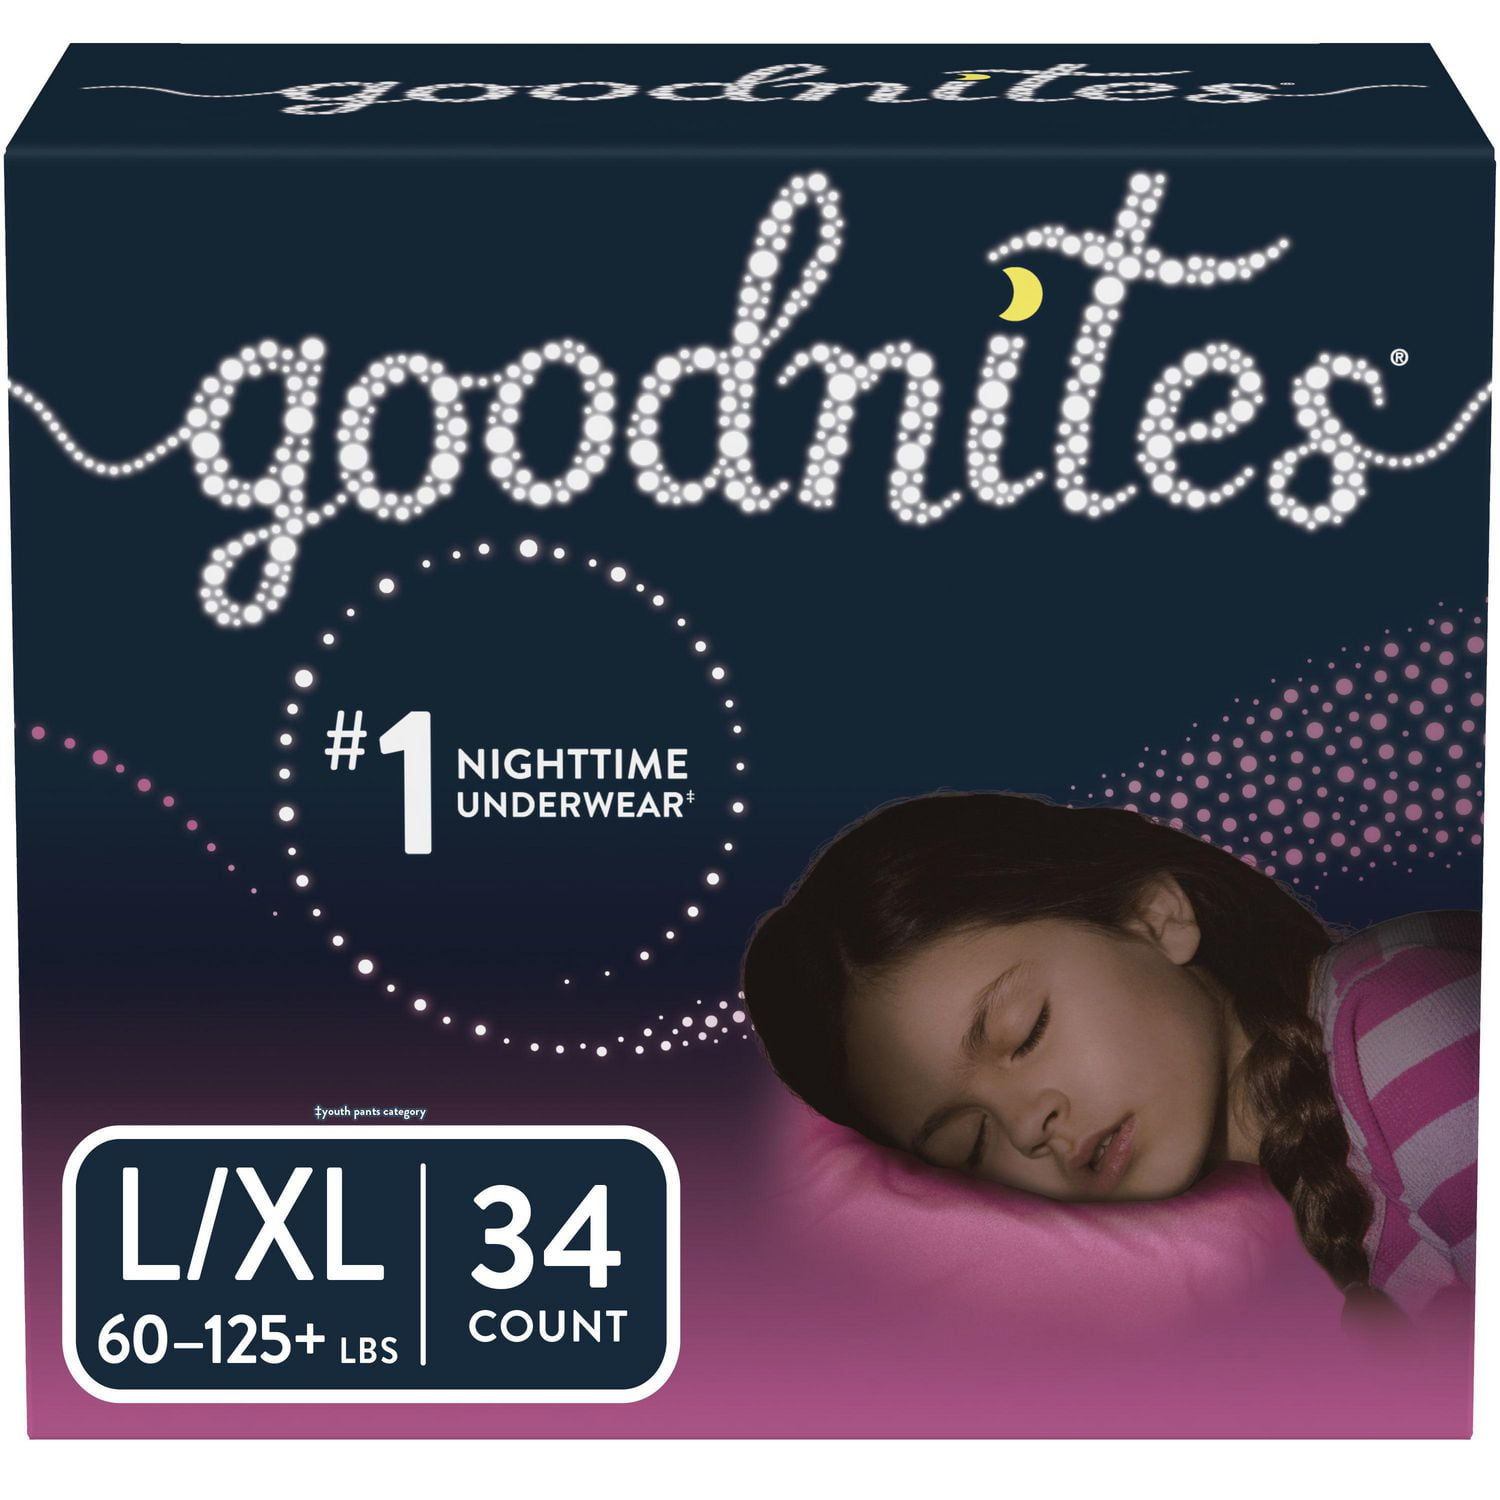 Goodnites Bedtime Bedwetting Underwear, Giga Pack, Size L/XL, 34